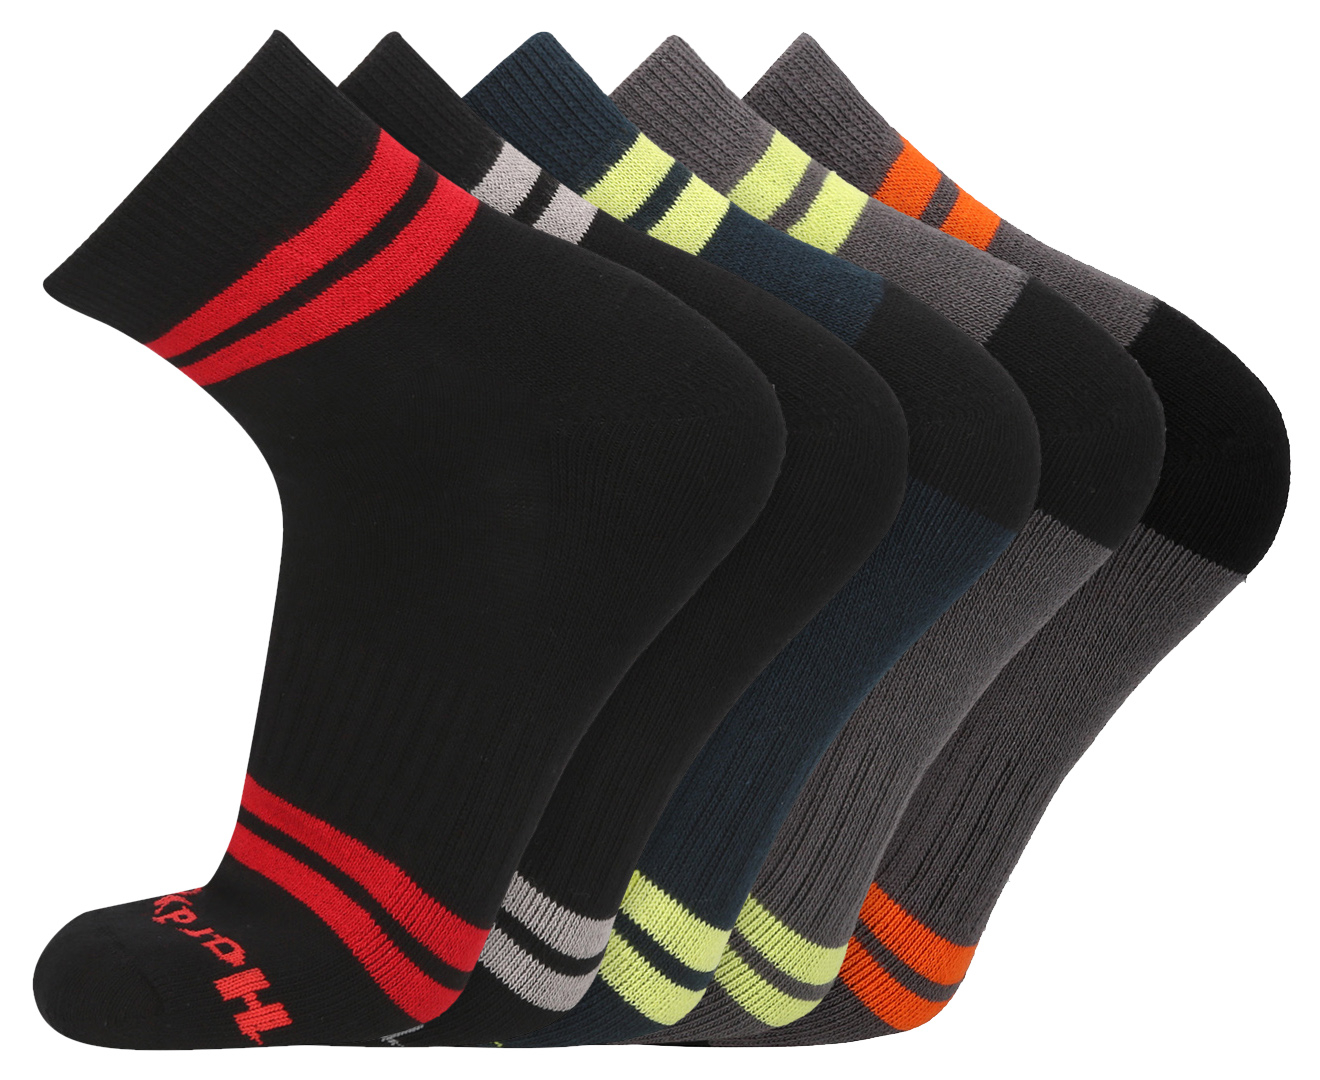 Hard Yakka Men's Size 7-12 Anklet Work Socks 5-Pack - Multi | Catch.co.nz